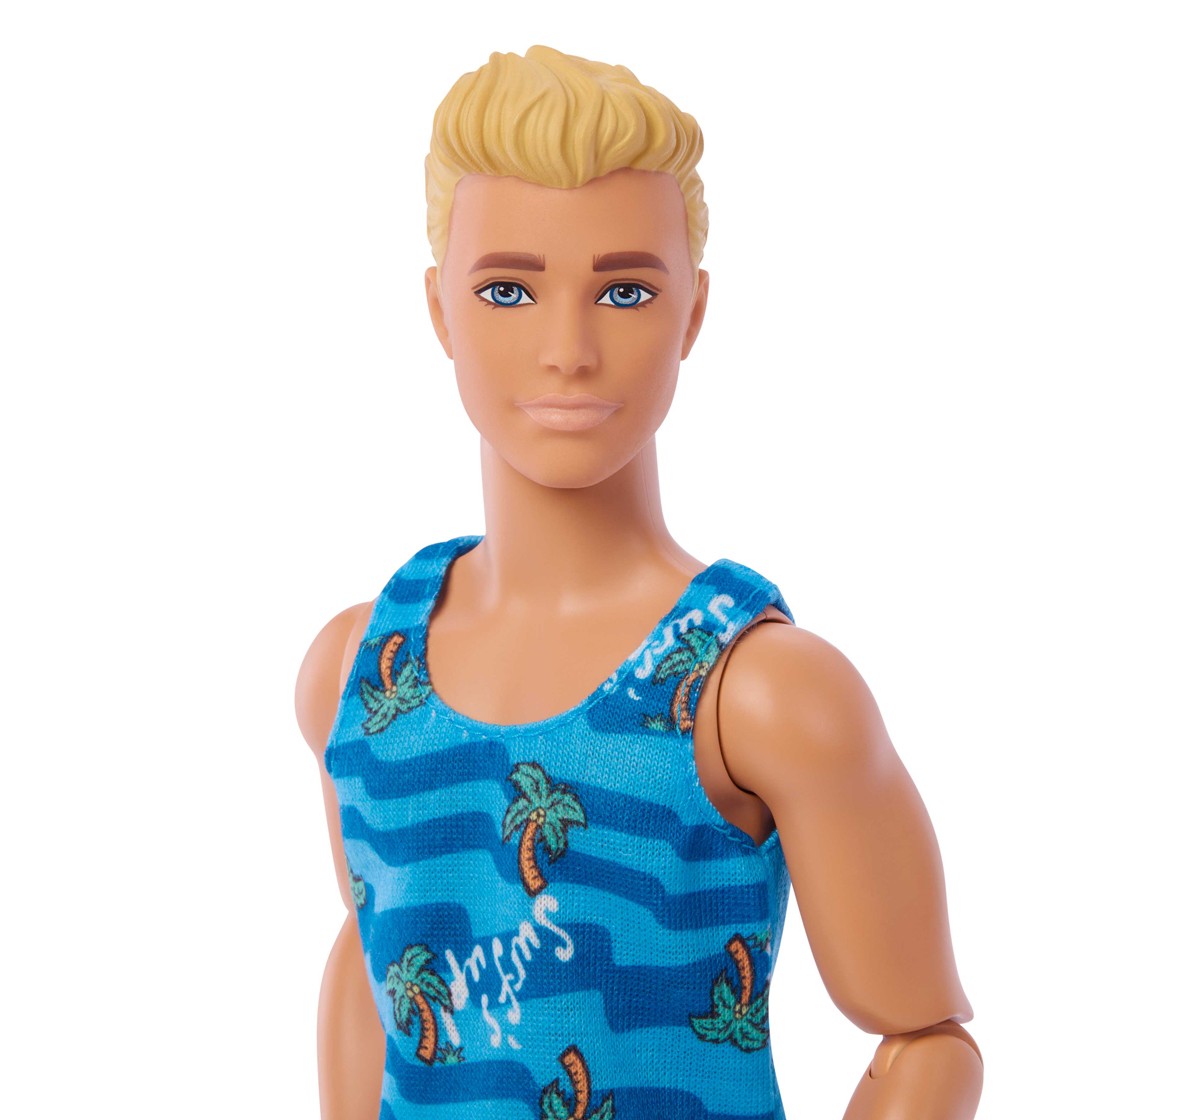 Ken Doll with Surfboard, Poseable Blonde Barbie Ken Beach Doll, Kids for 3Y+, Multicolour